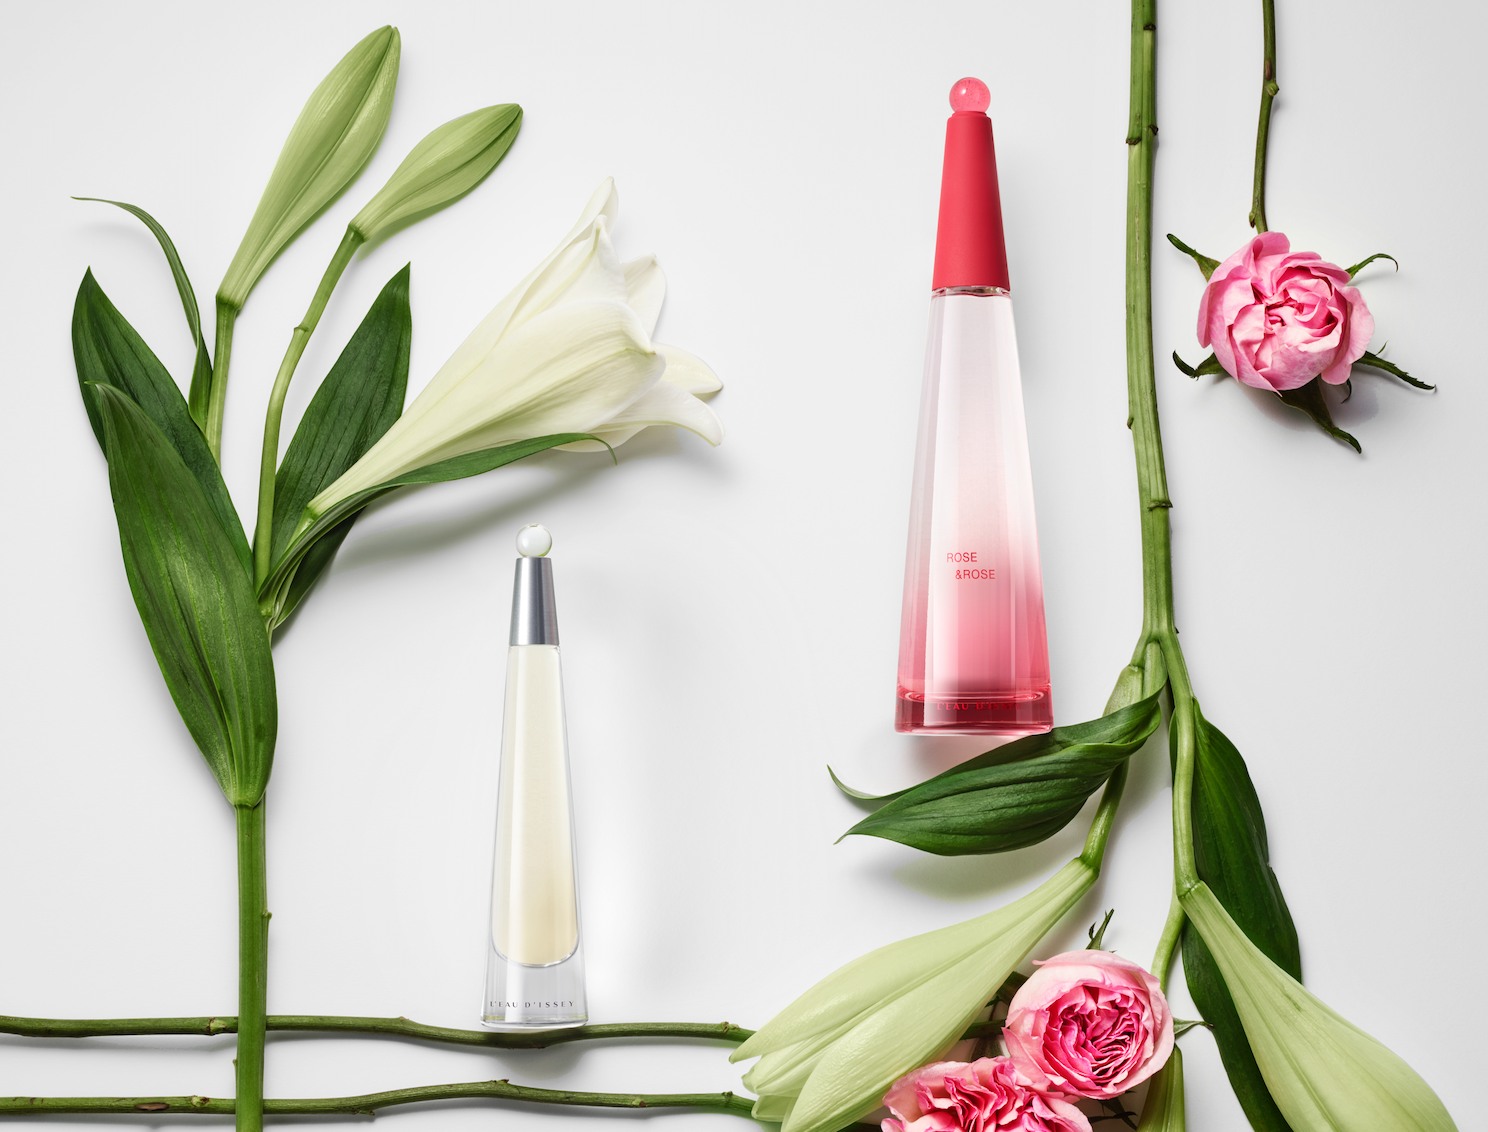 Louis Vuitton unveils new fragrance worth RM 4,000